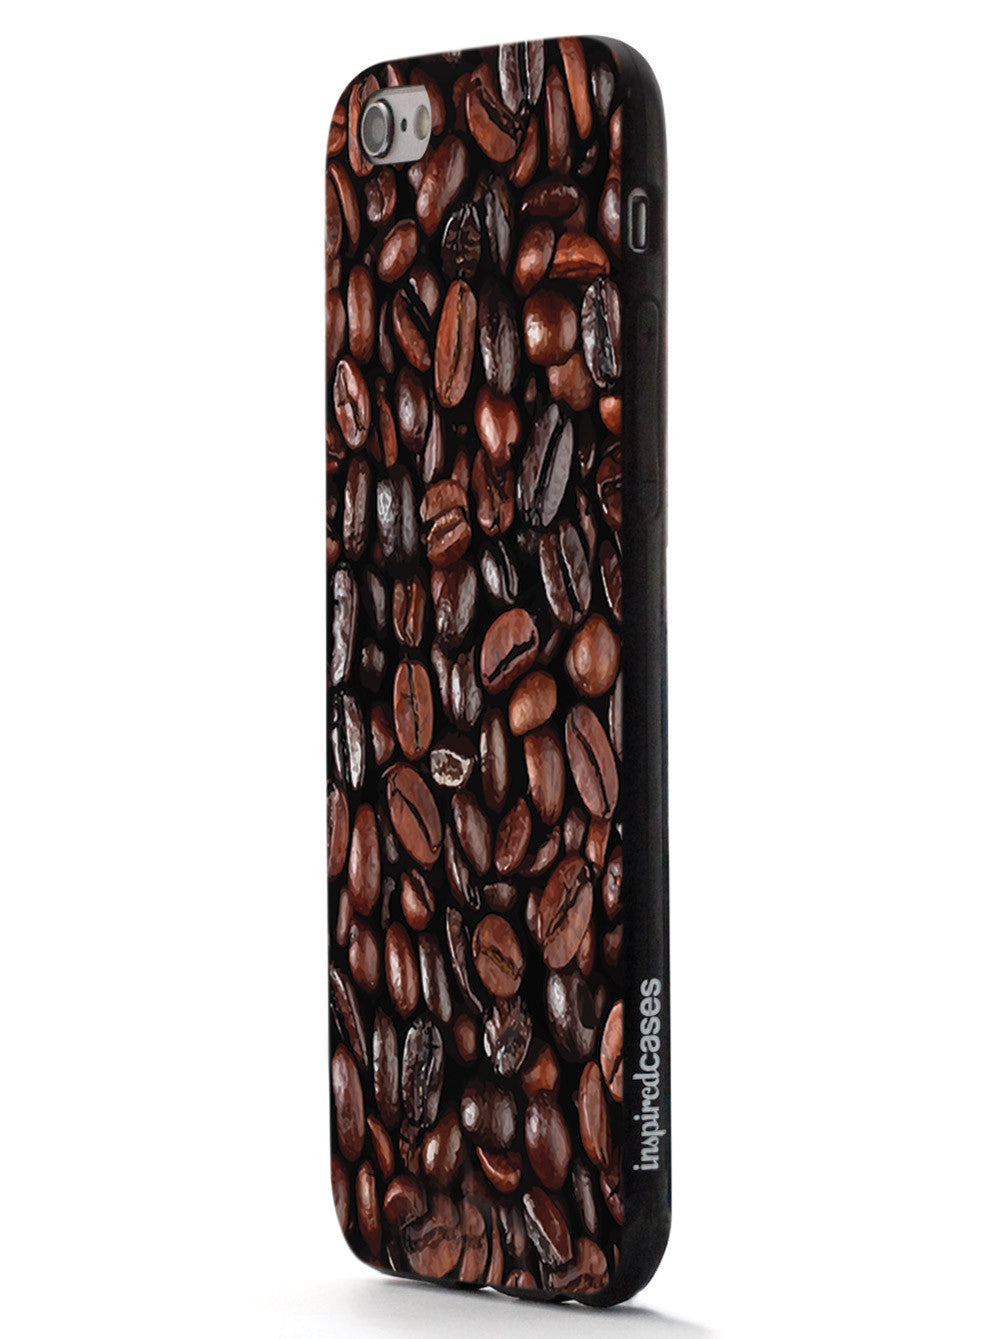 Coffee Beans Pattern Case